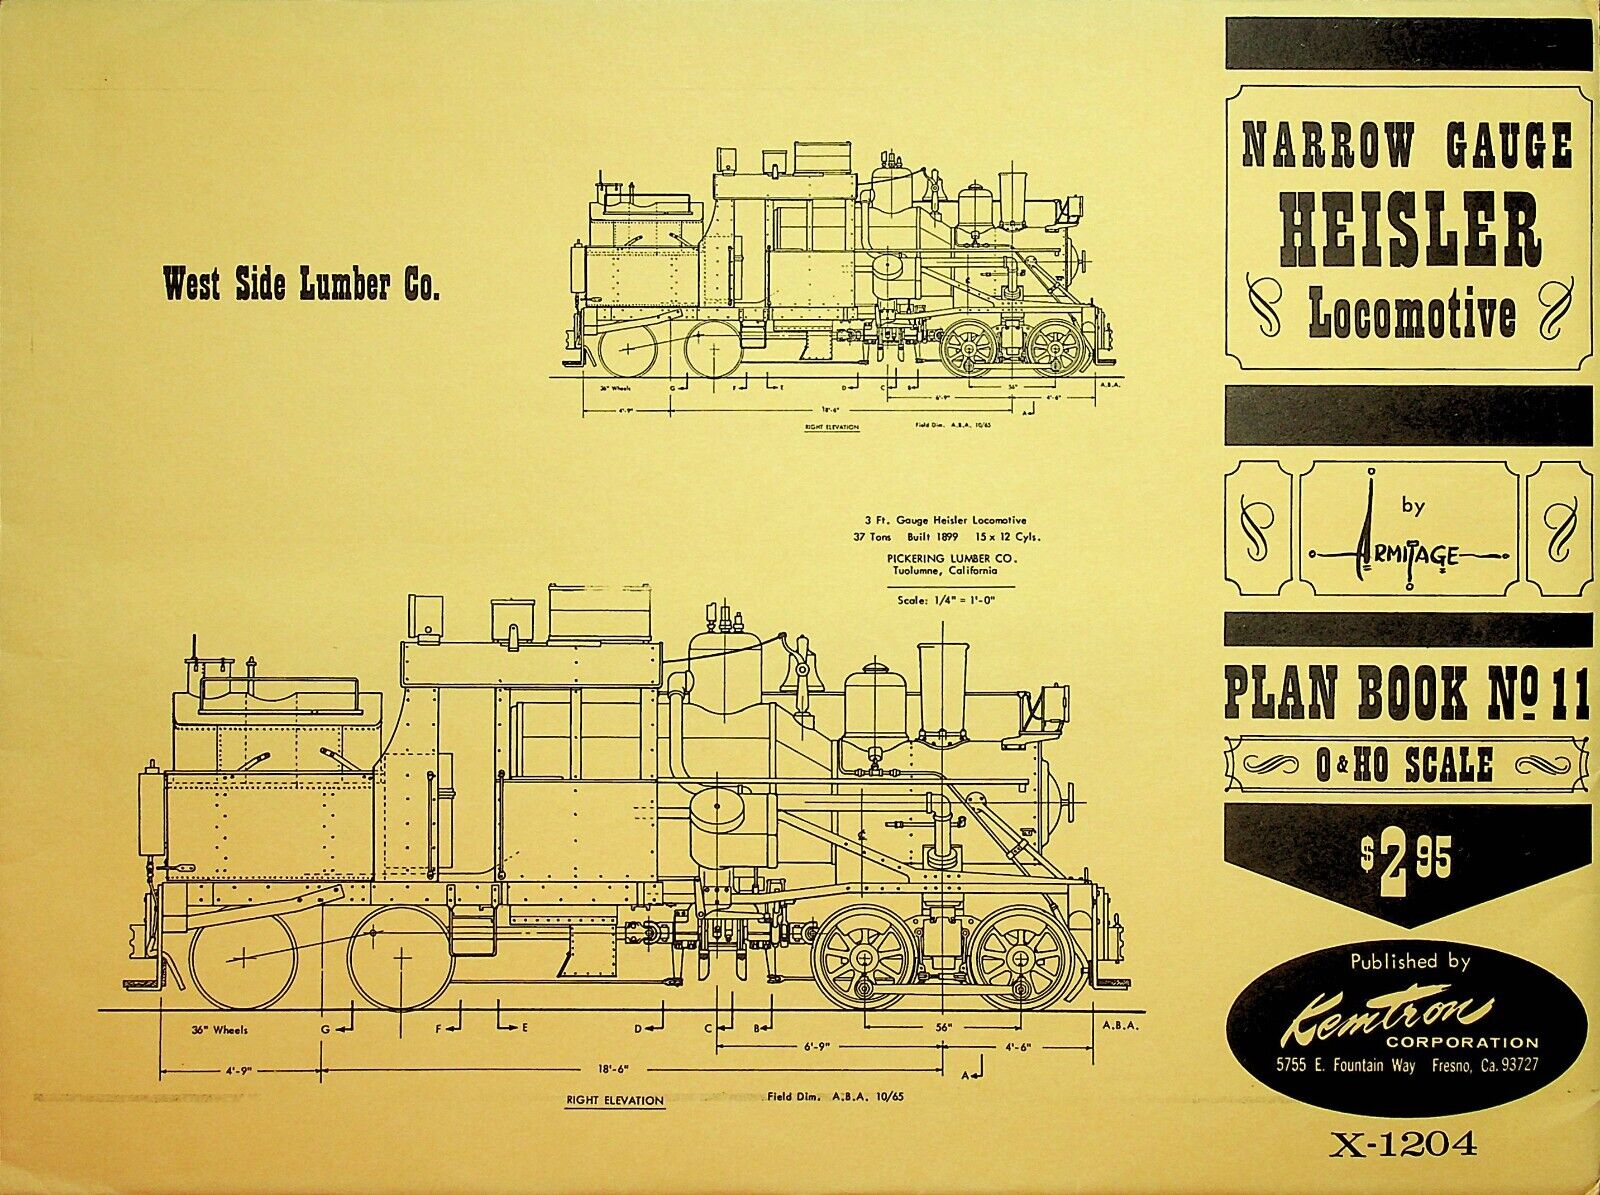 Kemtron Plan Book No 11 O & HO Narrow  Gauge Heisler Loco X-1204 Model Railroad